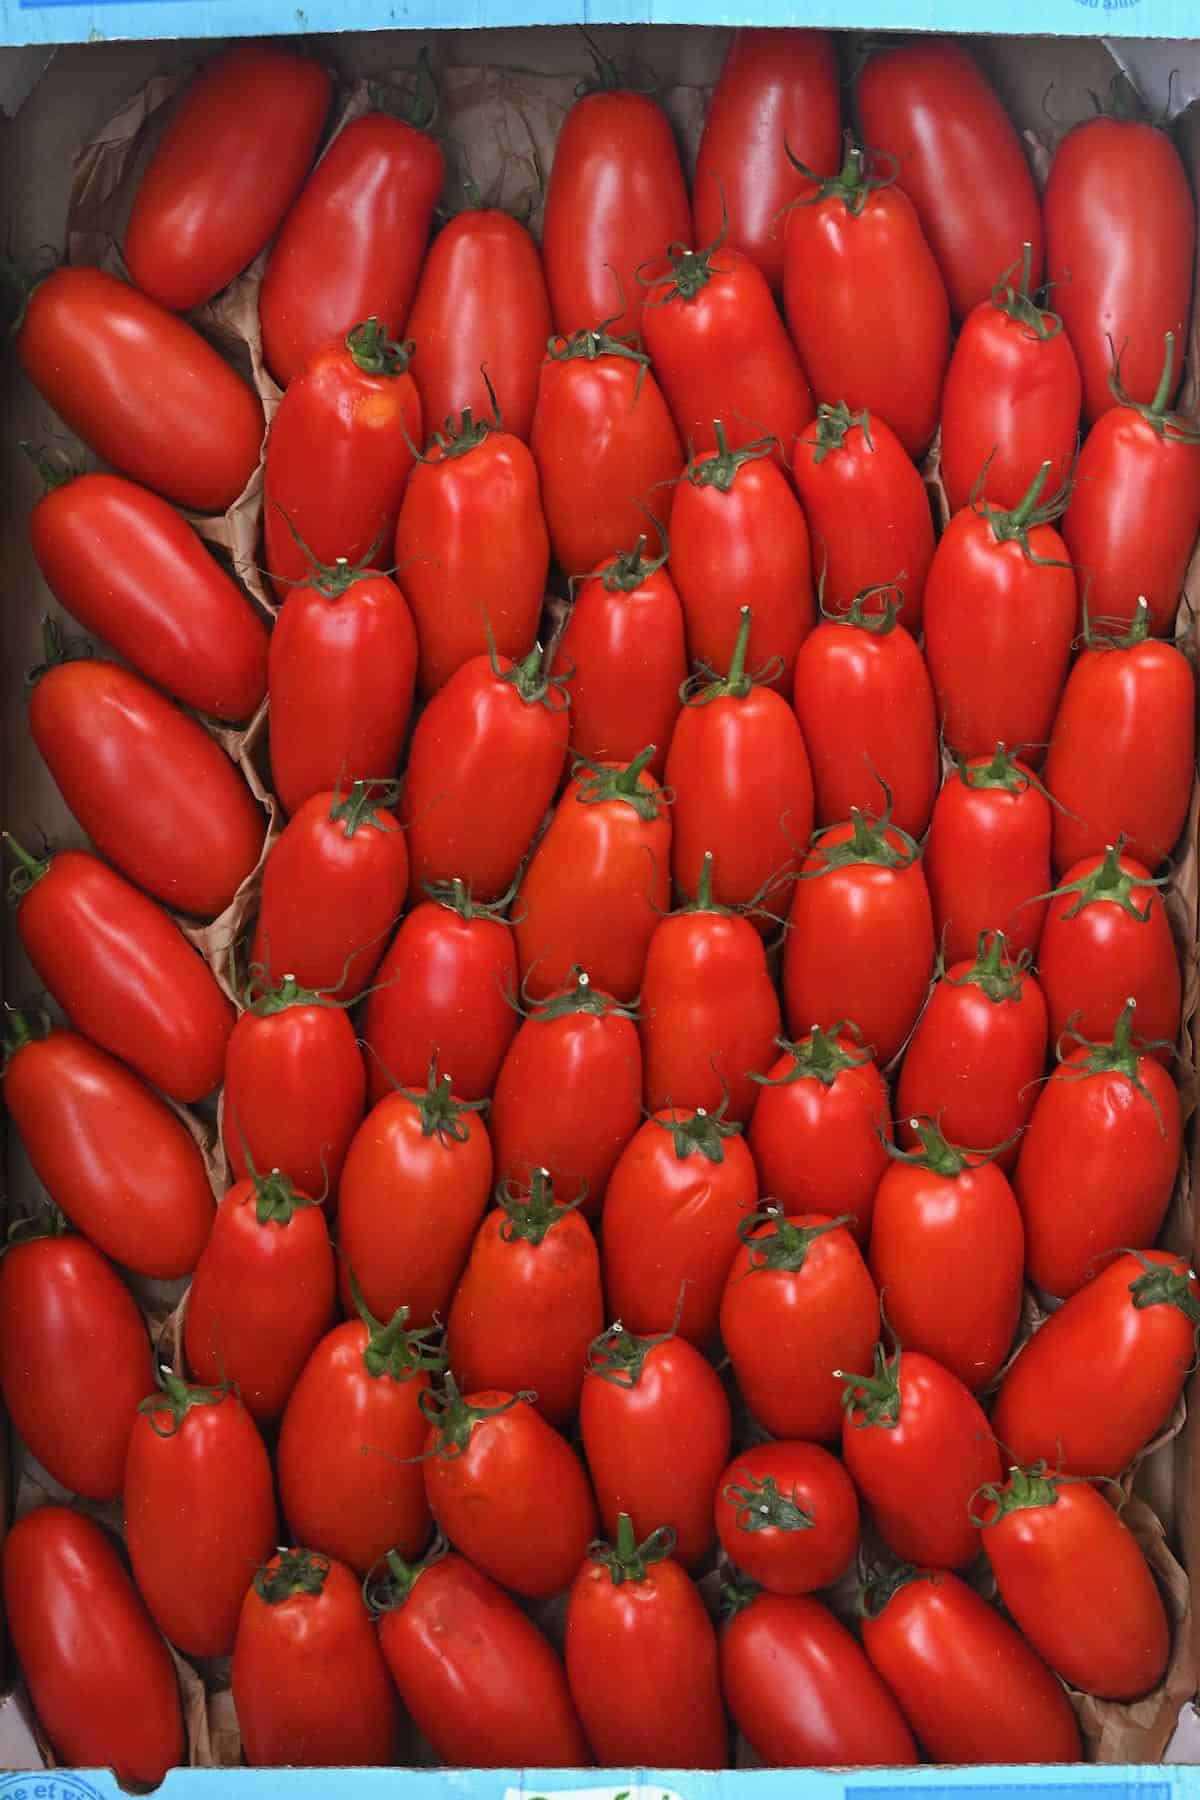 San Marzano tomatoes in a box